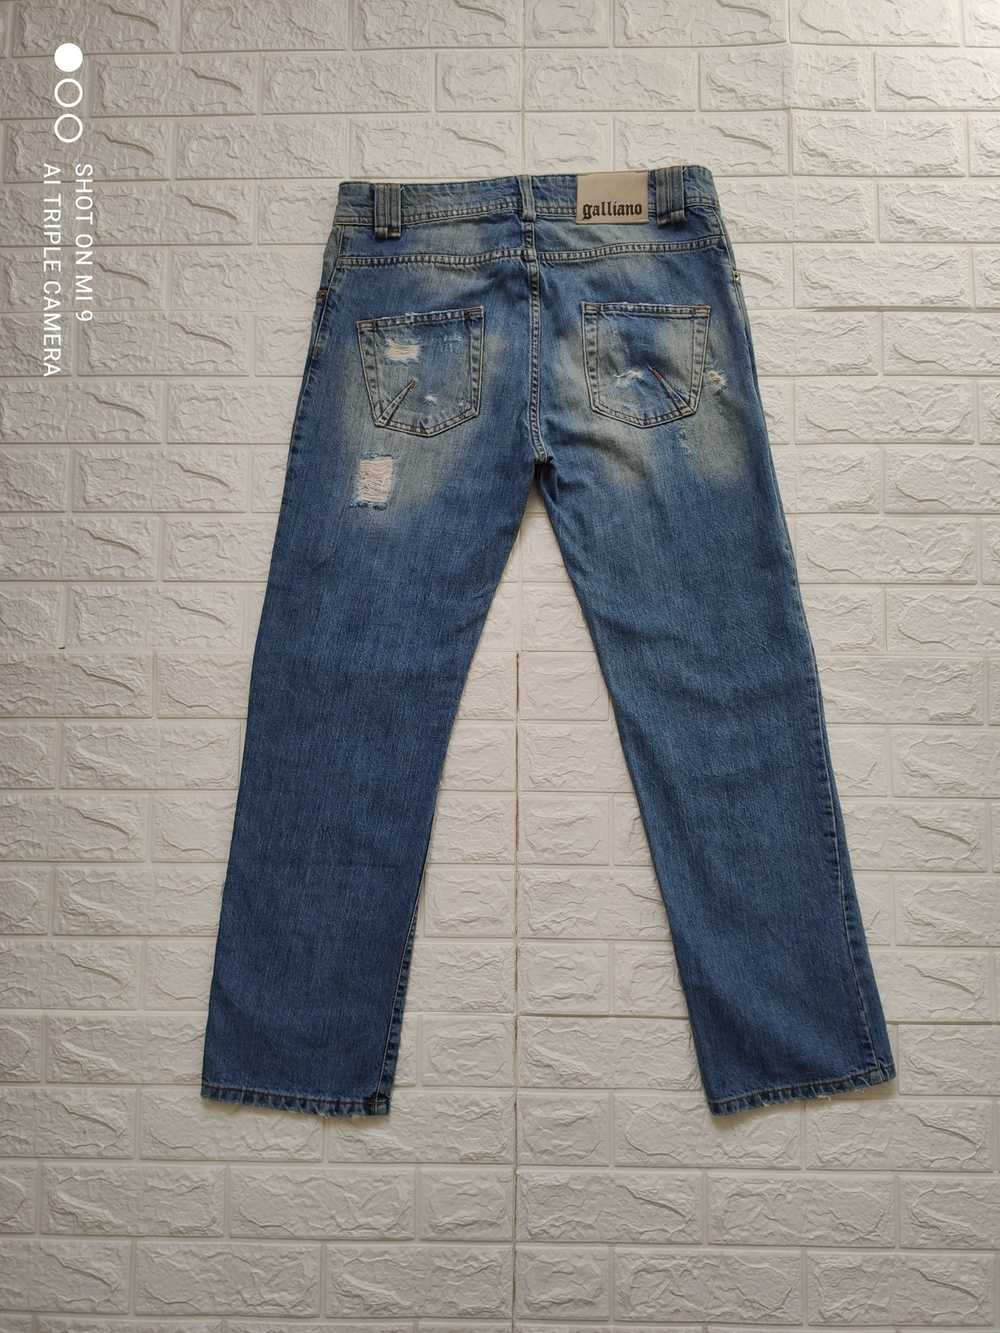 John Galliano Galliano blue ripped Italian jeans - image 2